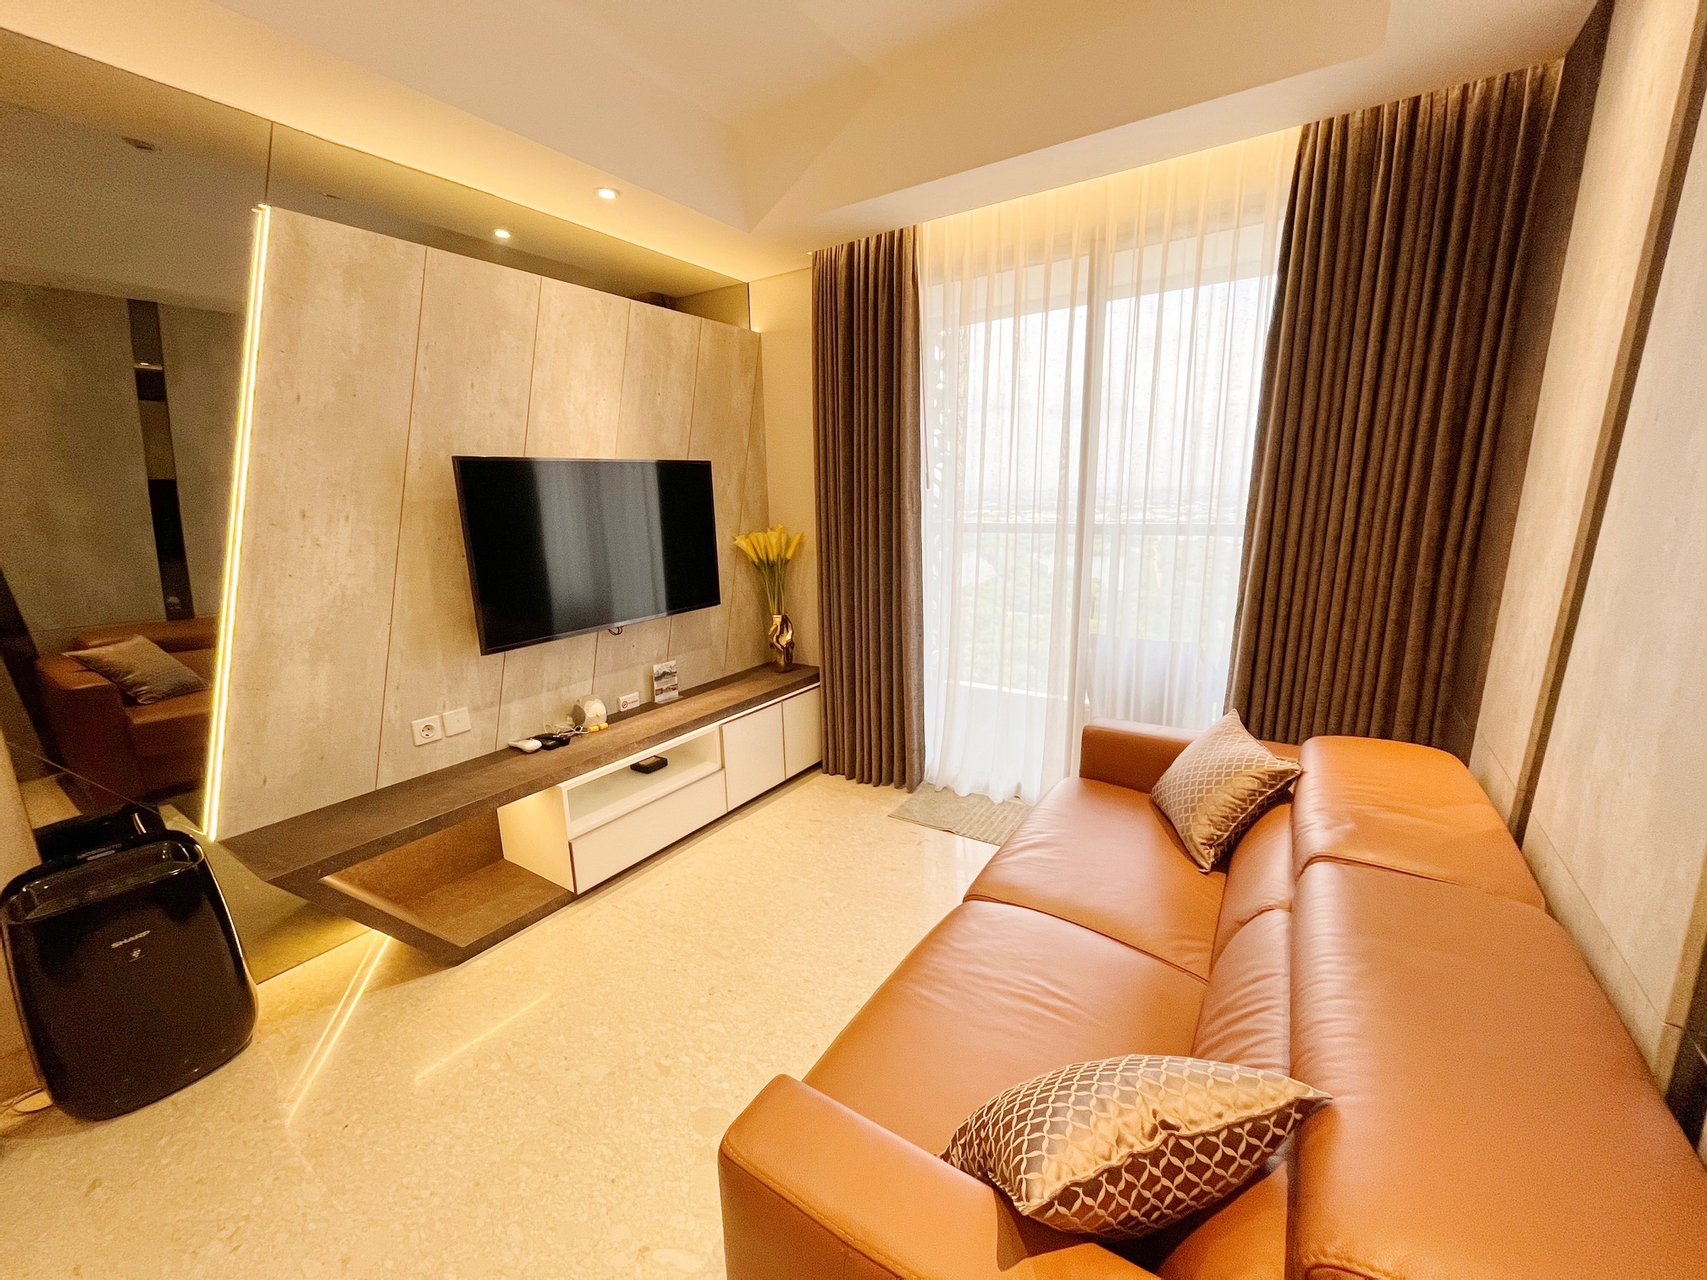 Bedroom 5, Gold Coast PIK Premium Sea View Apartments, North Jakarta